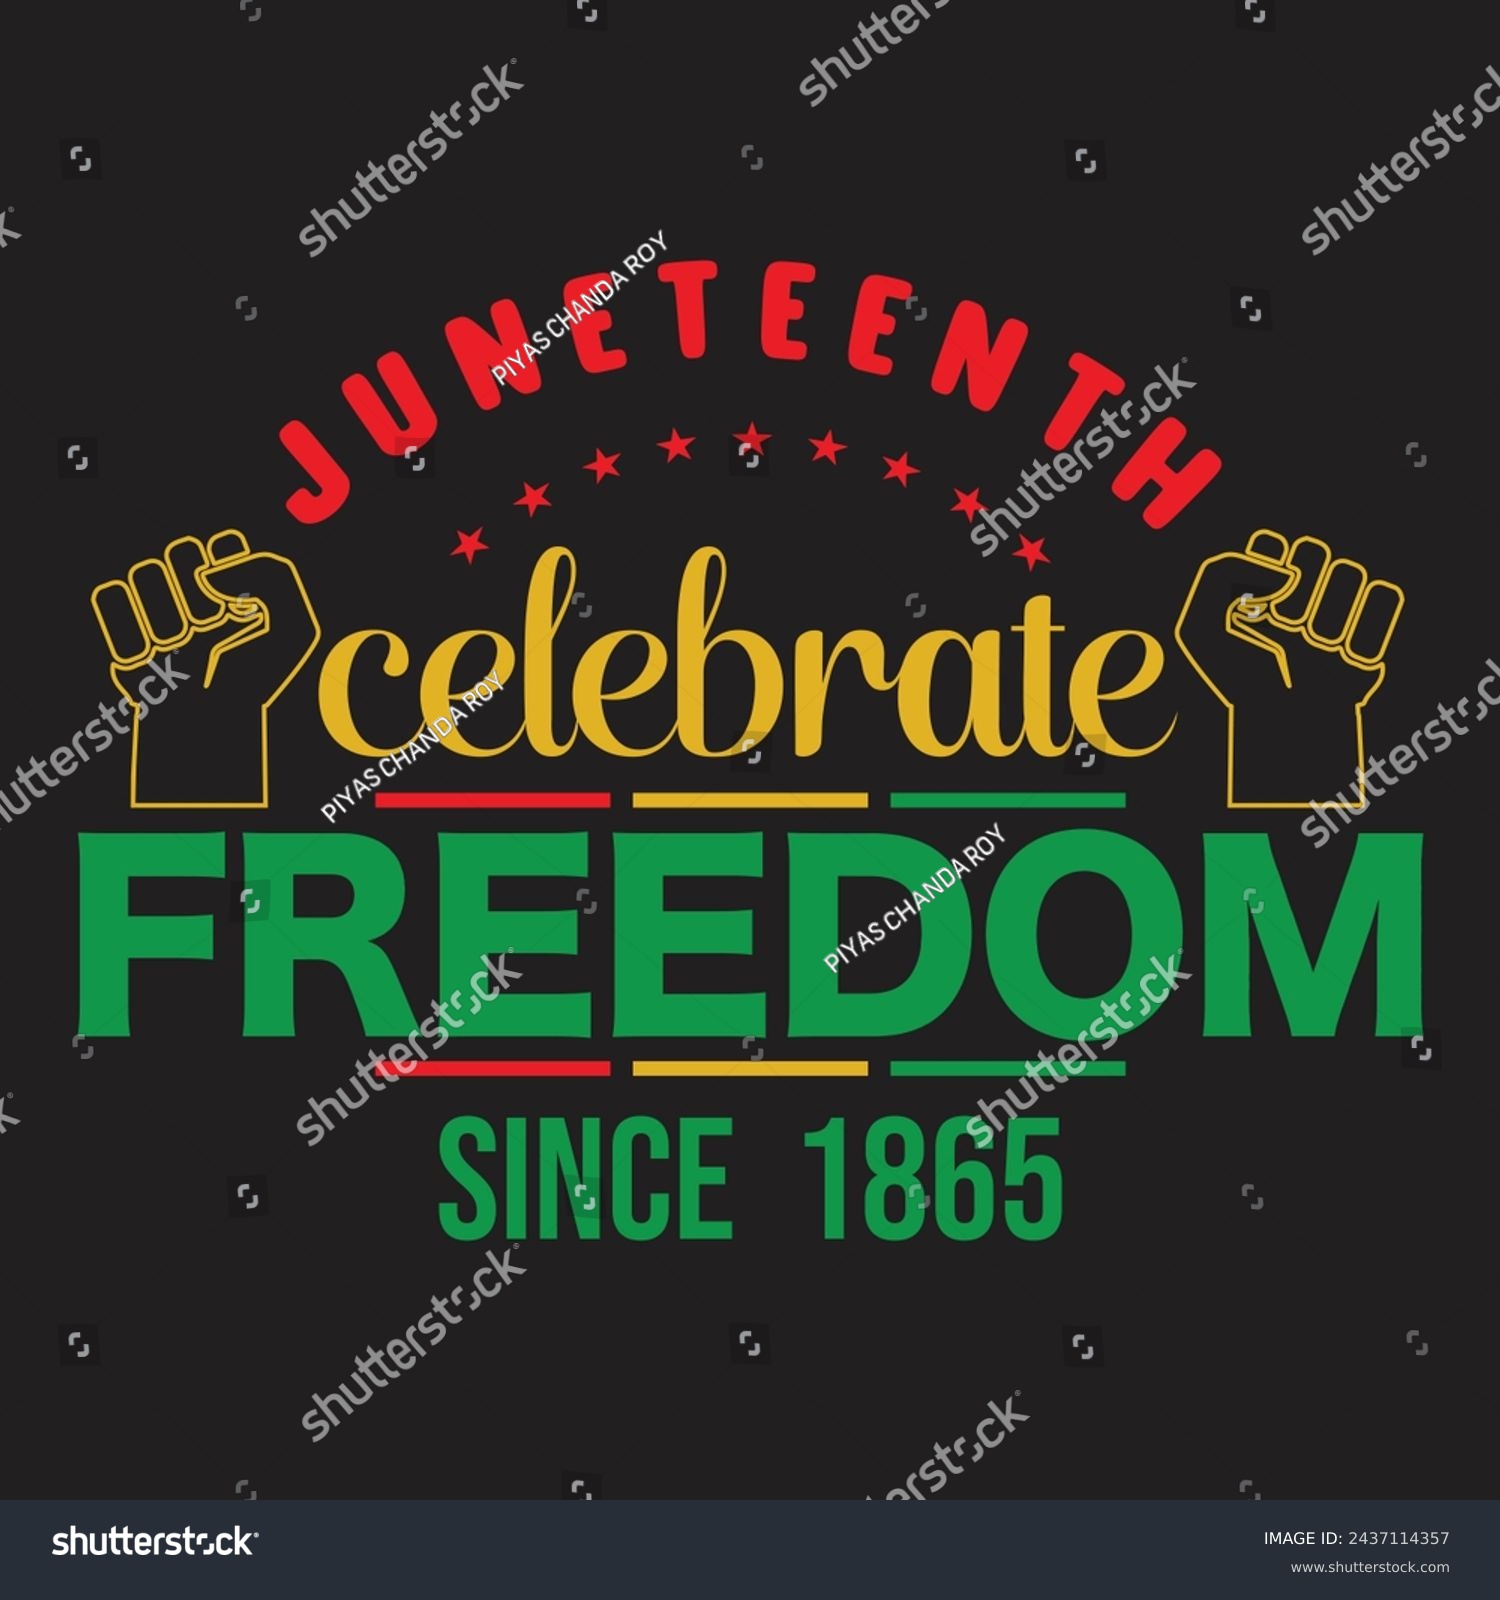 SVG of Juneteenth Celebrate Freedom Since 1865, Black Women  for Juneteenth, Emancipation Day, Black History, Black Freedom svg